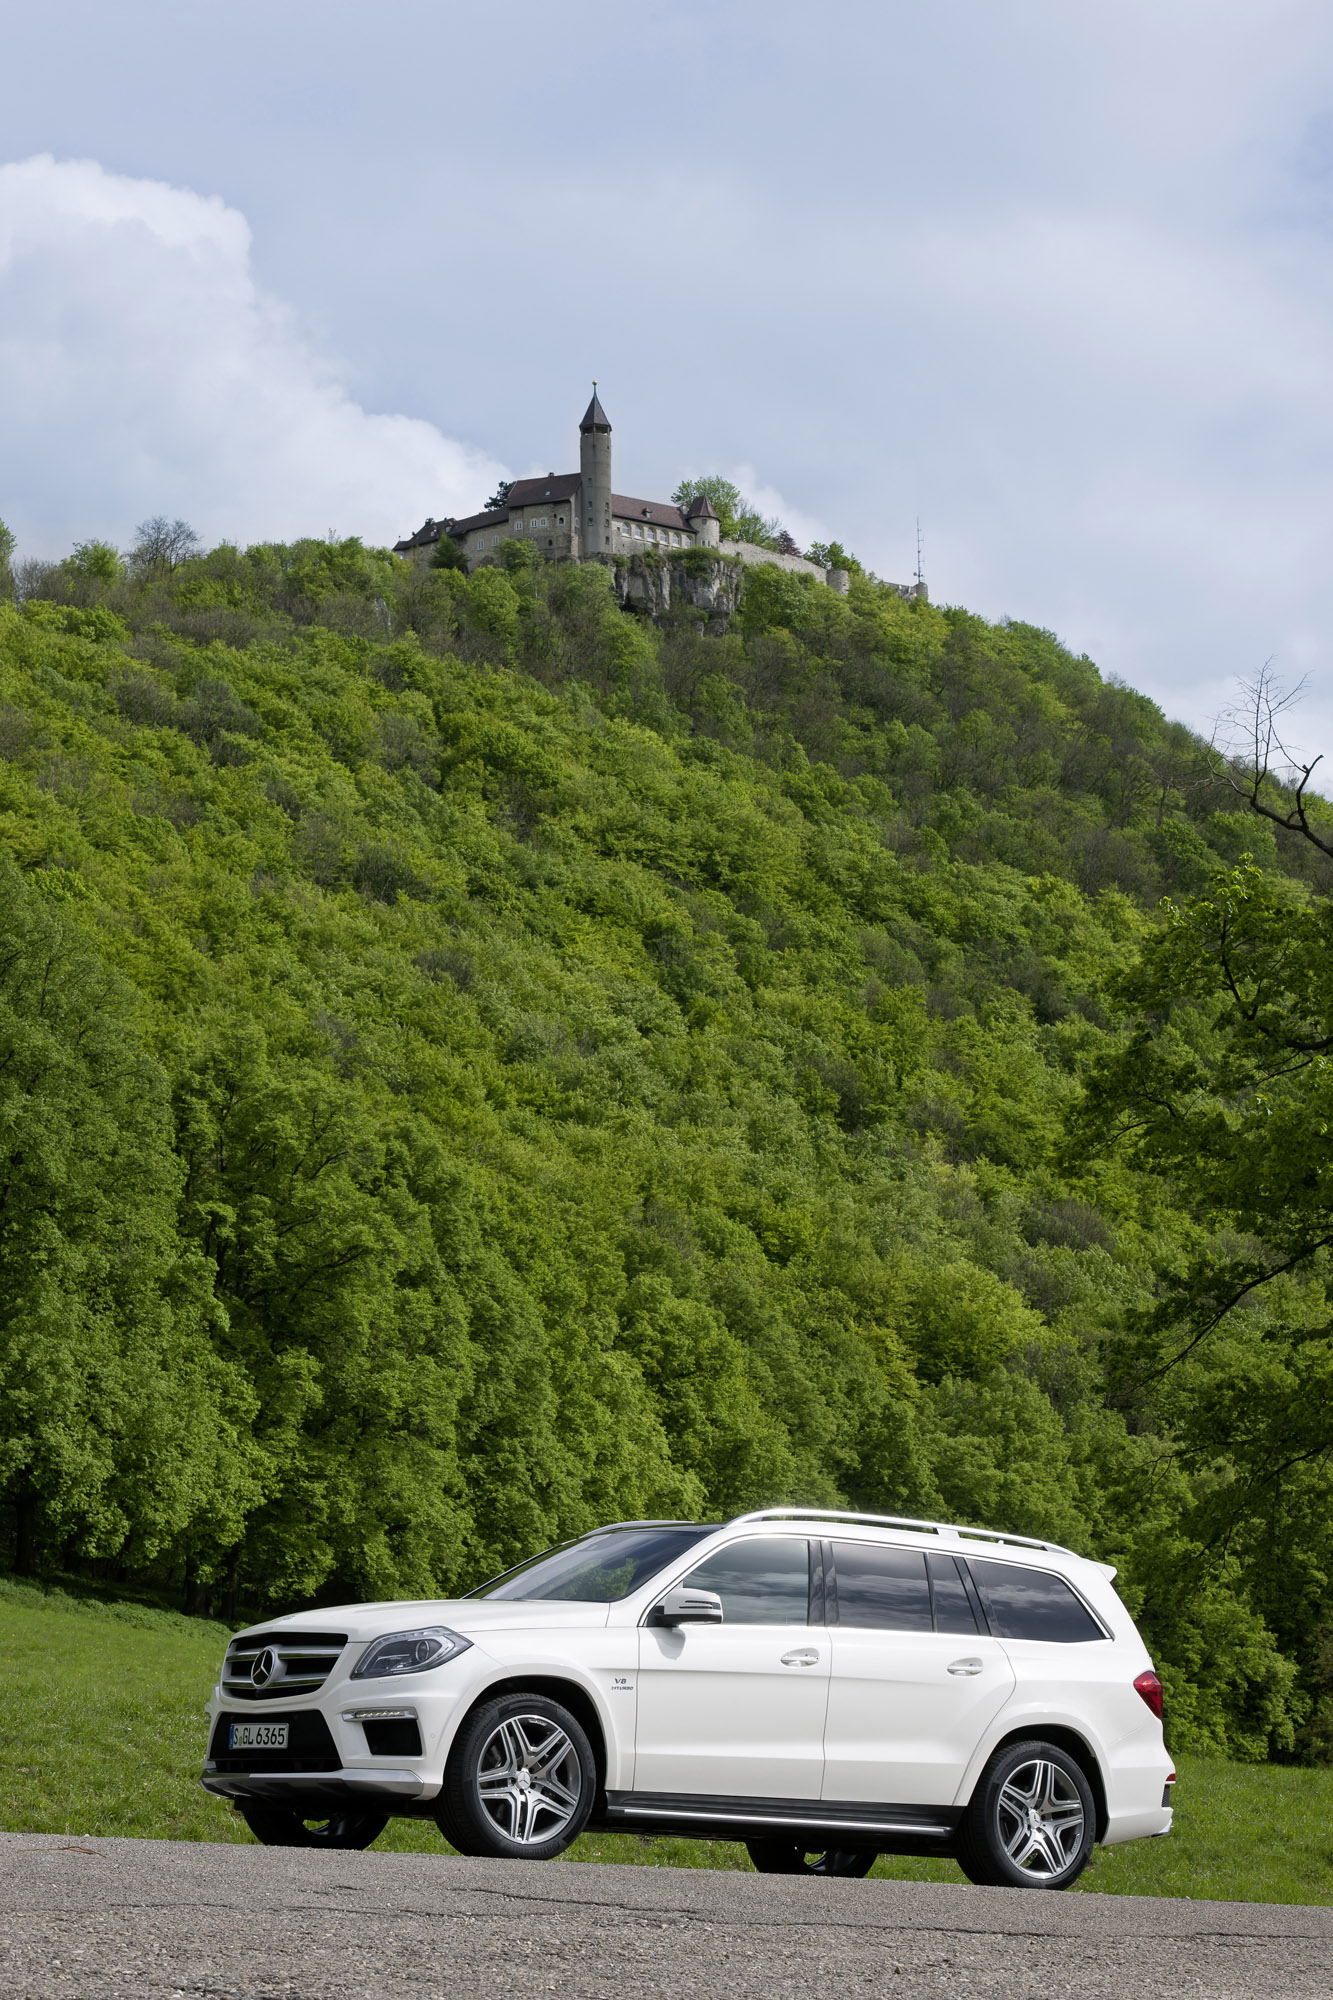 Mercedes-Benz GL 63 AMG